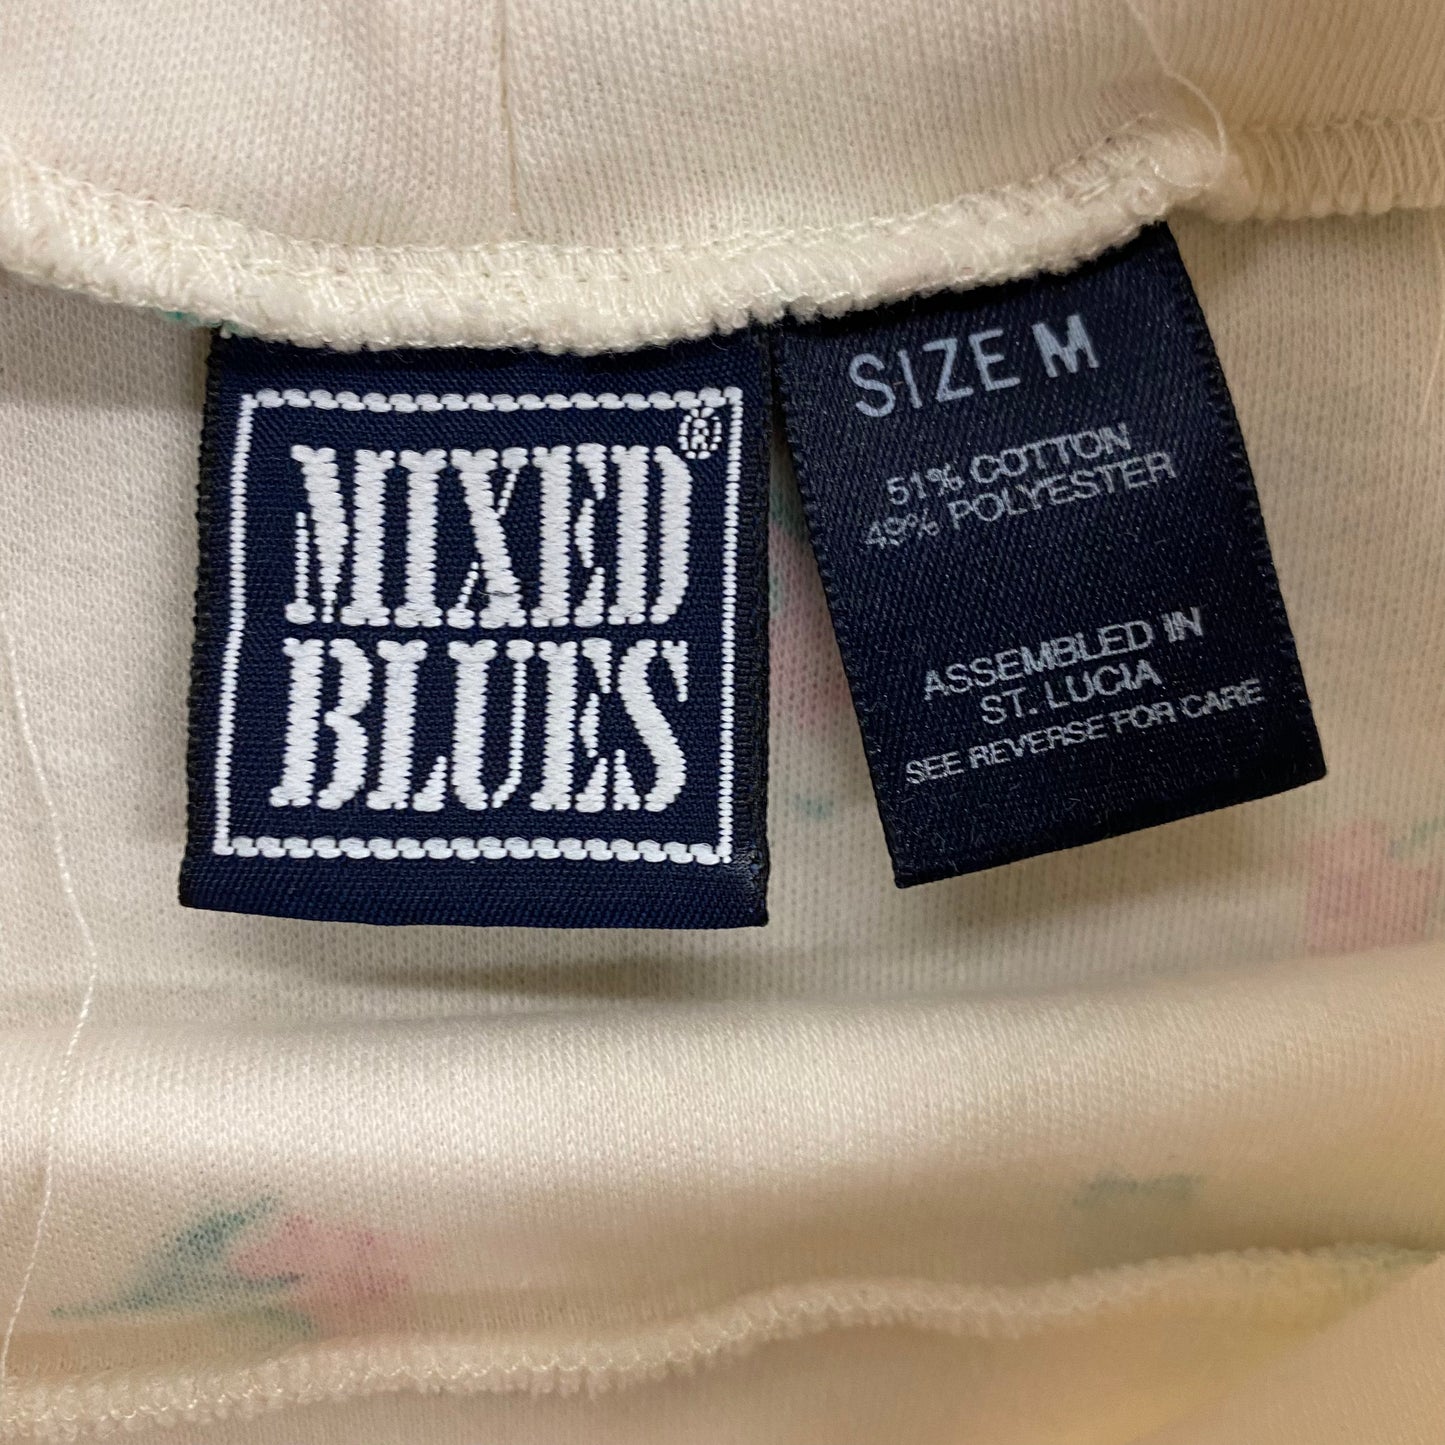 Vintage Mixed Blues White Floral Turtleneck Shirt - Size Medium